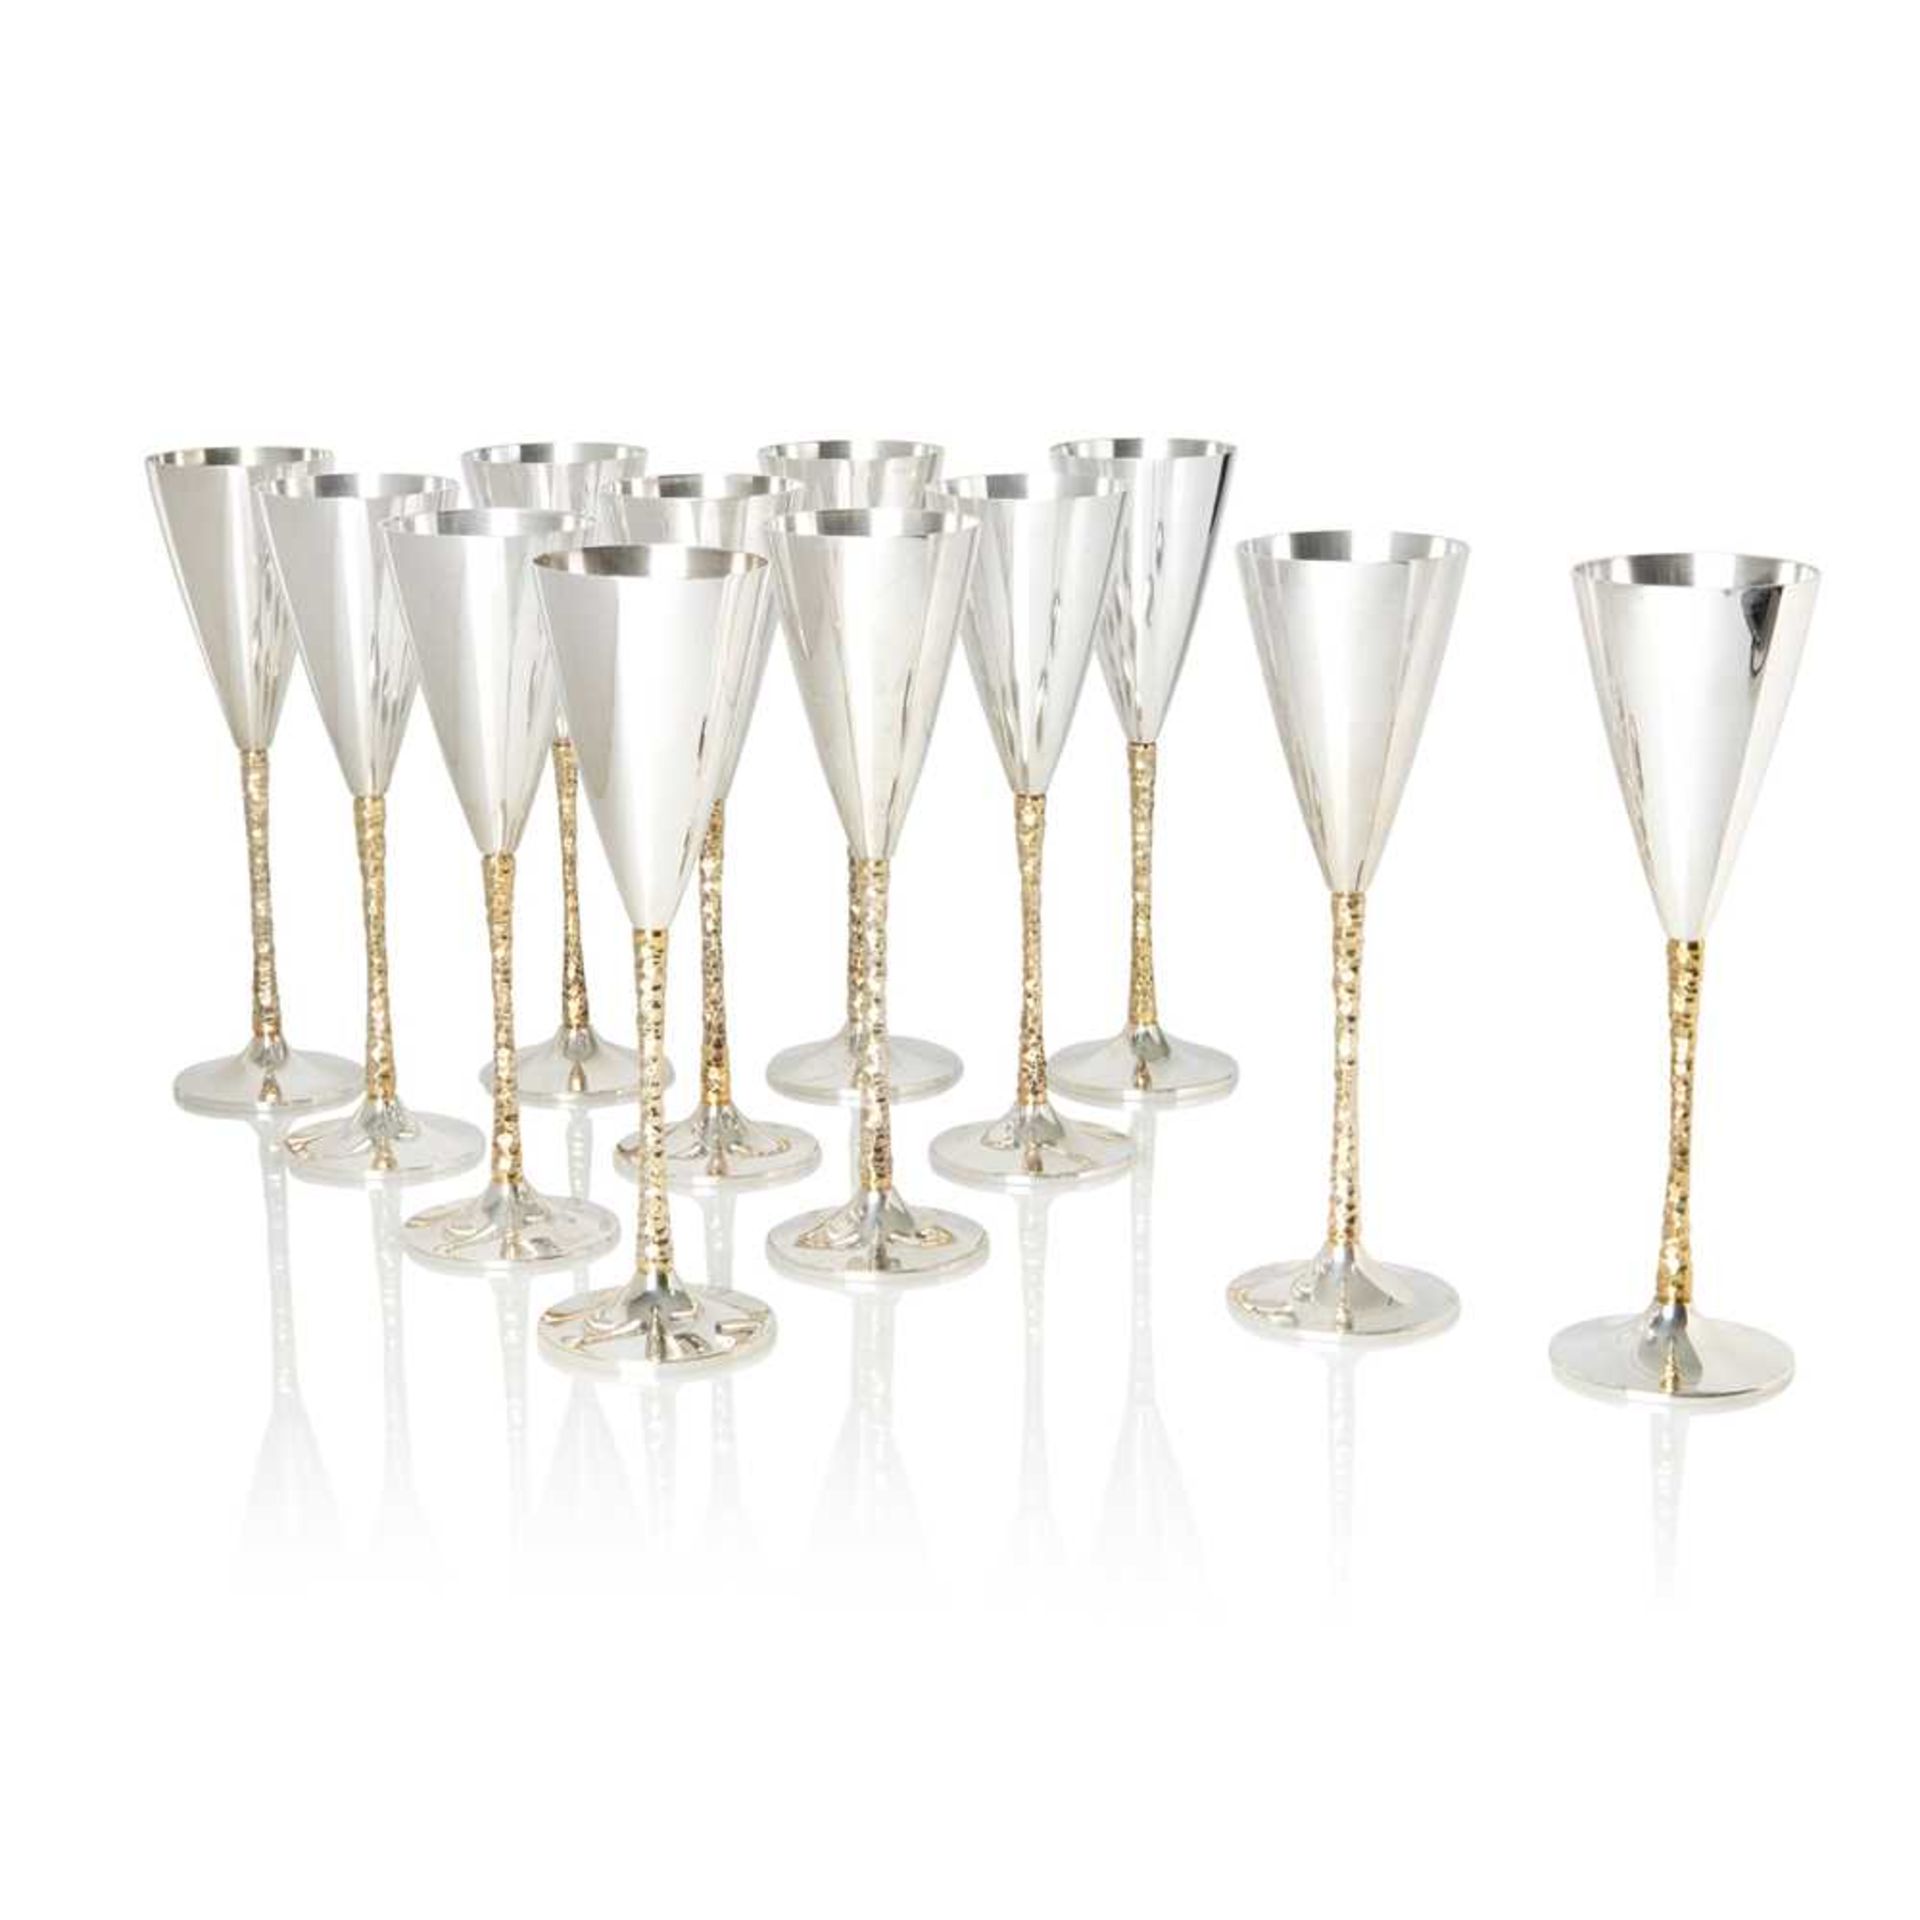 Stuart Devlin A.O. C.M.G. (Australian/British 1931-2018) Set of 12 Champagne Flutes, London 1977-198